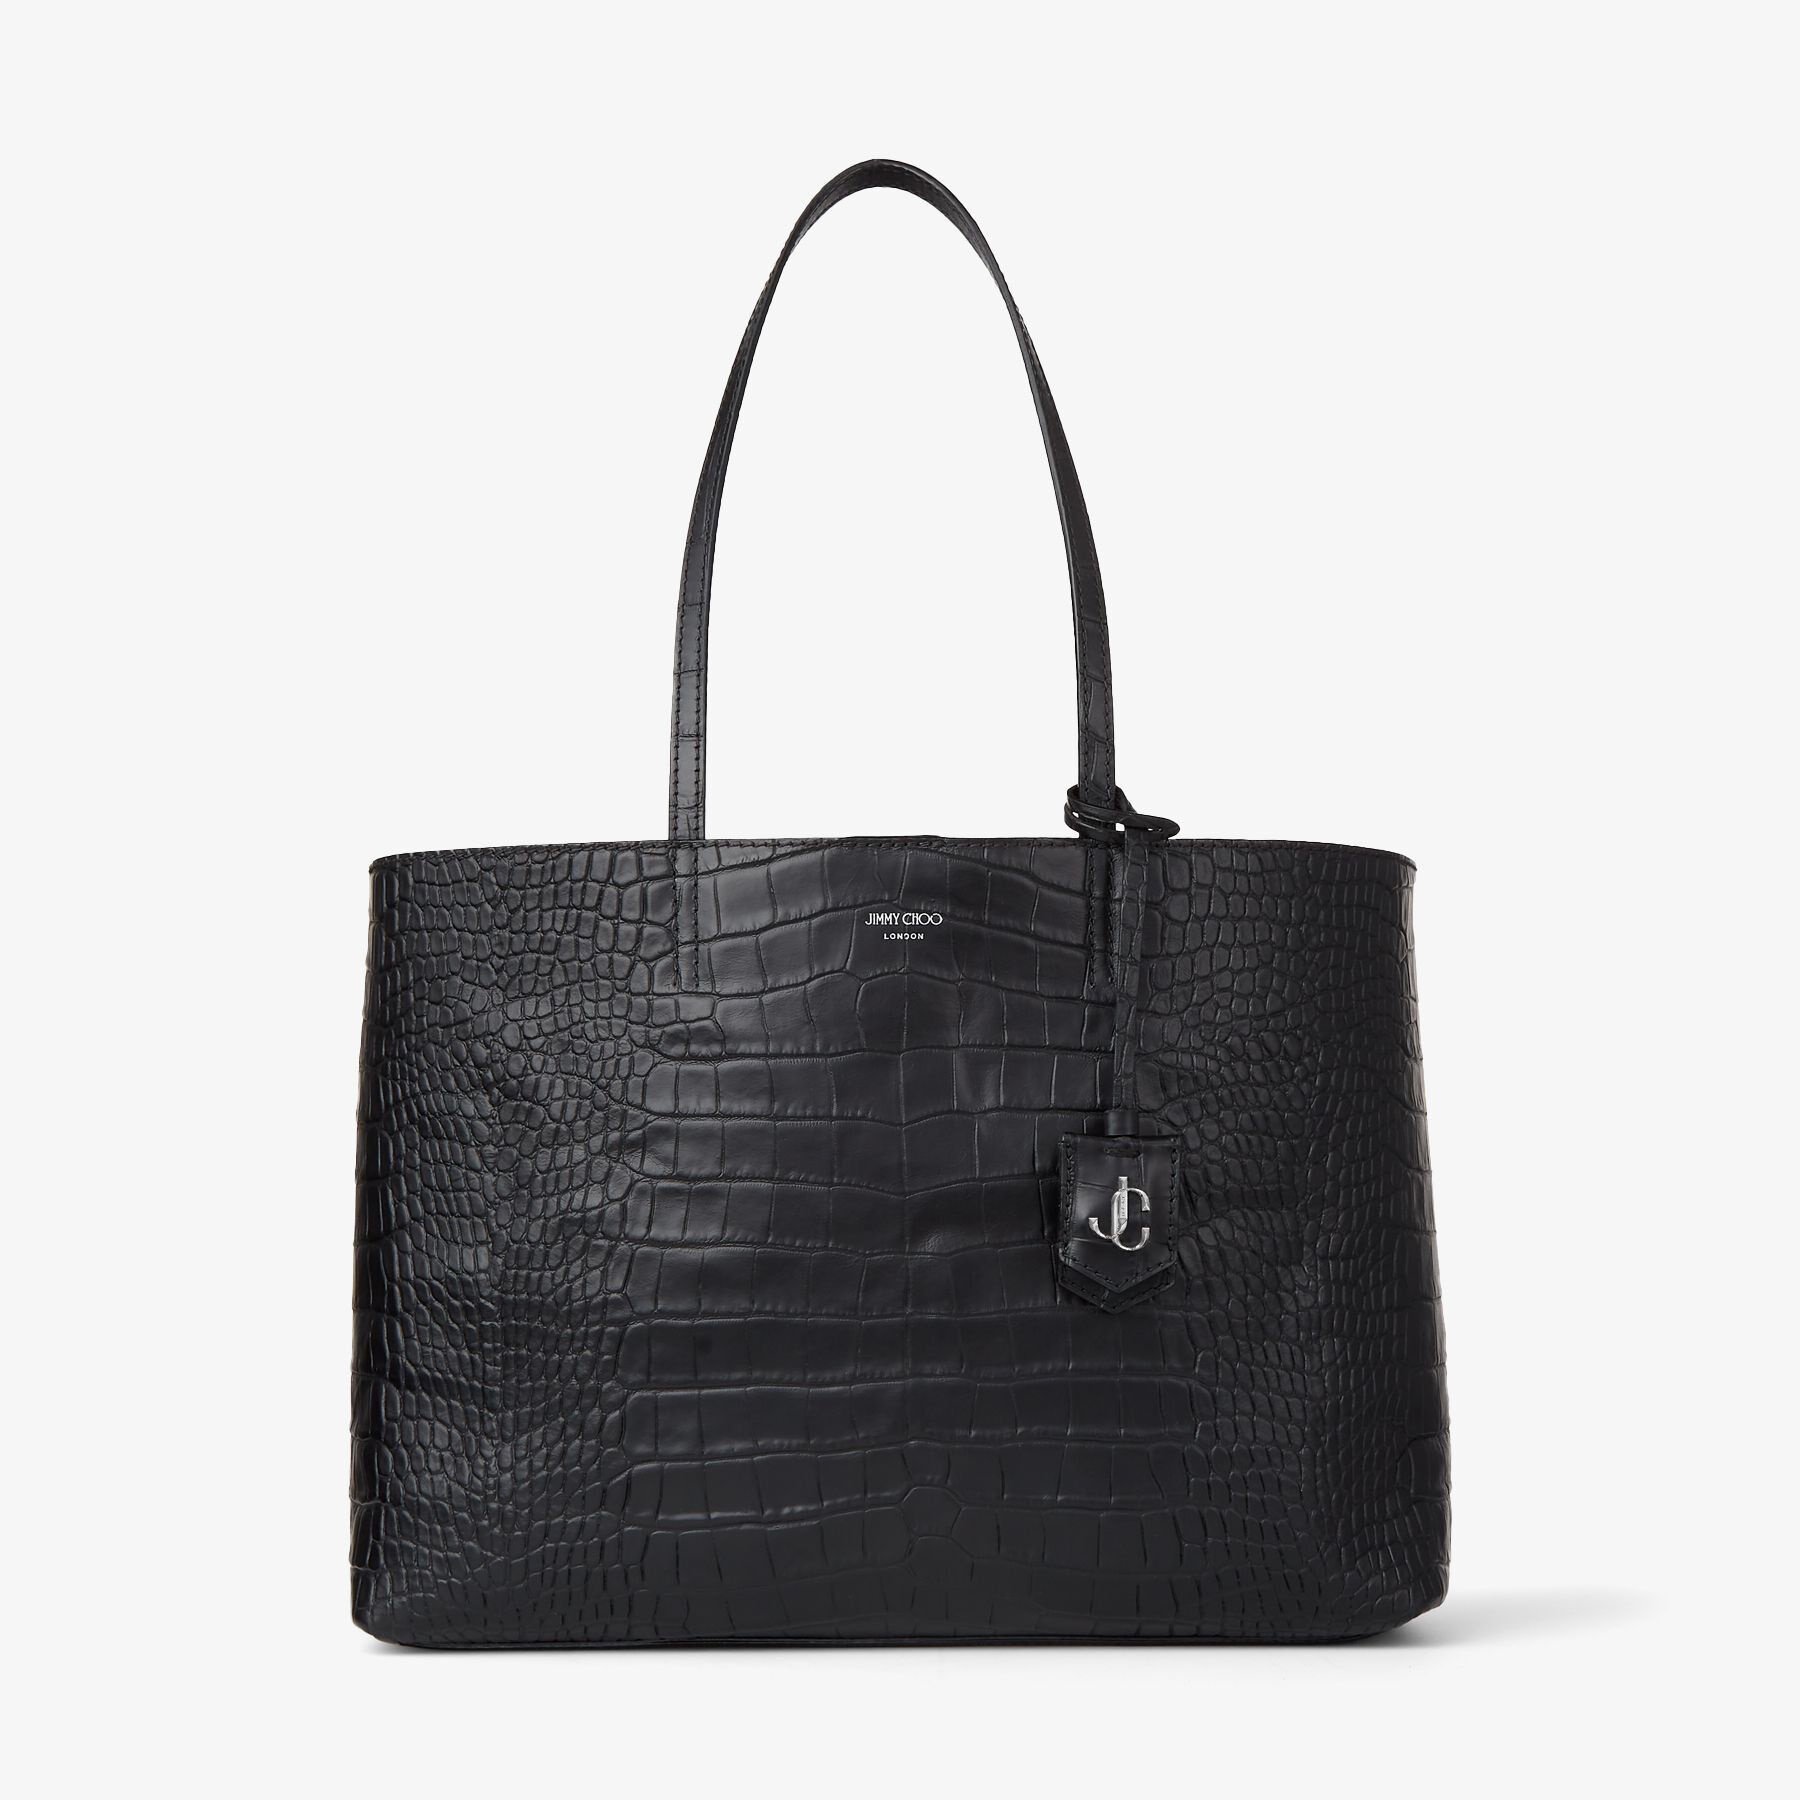 JIMMY CHOO Nine2Five E/W Black Croc Embossed Leather Tote Handbag 